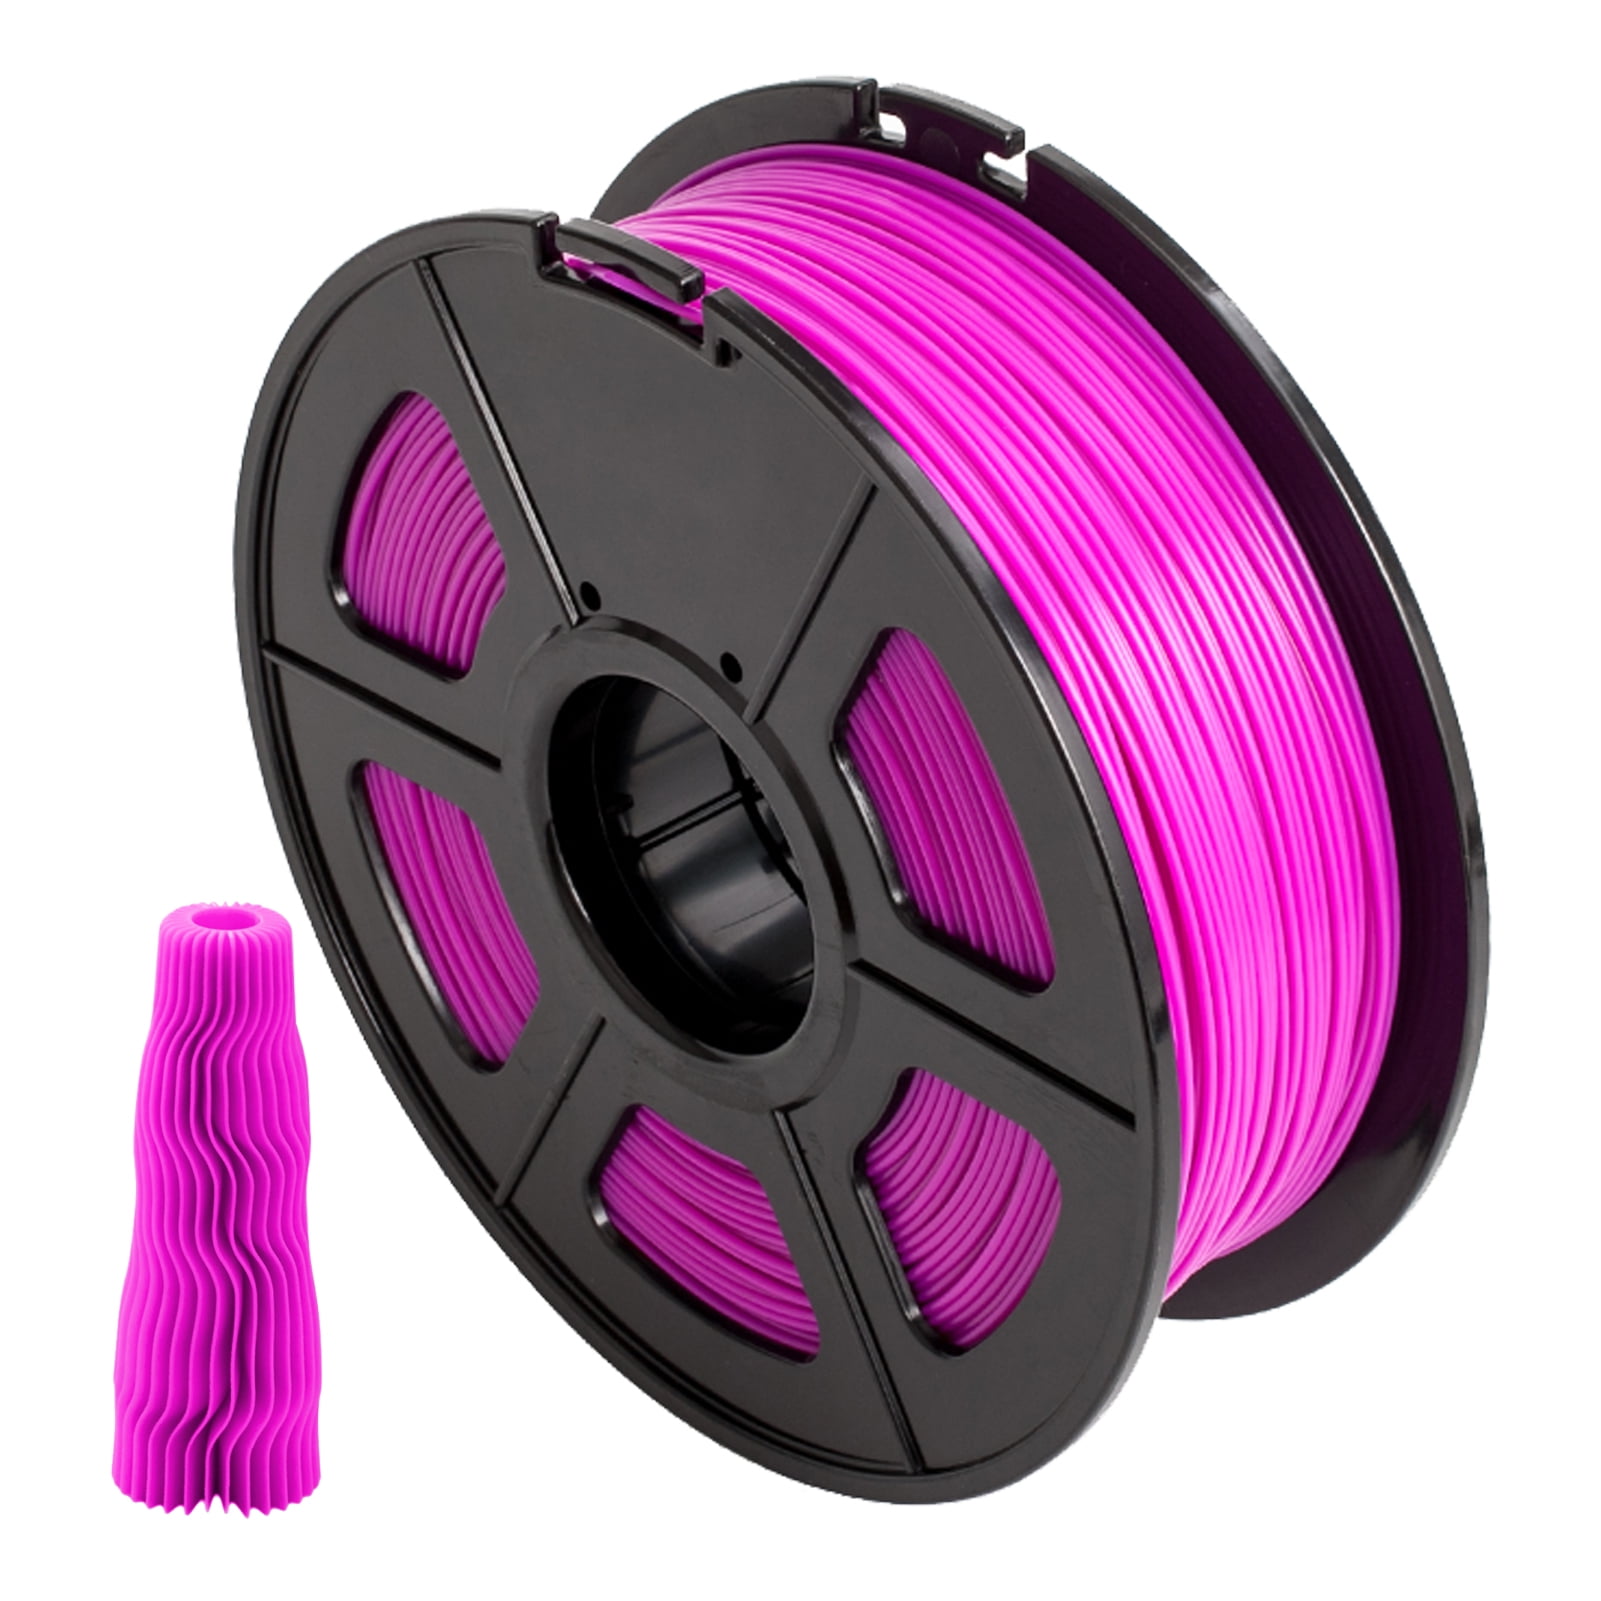 PETG Filament,3D Printer Filament,GIANTARM PETG Filament 1.75mm,Dimensional Accuracy / 1kg,Black 0.02mm 